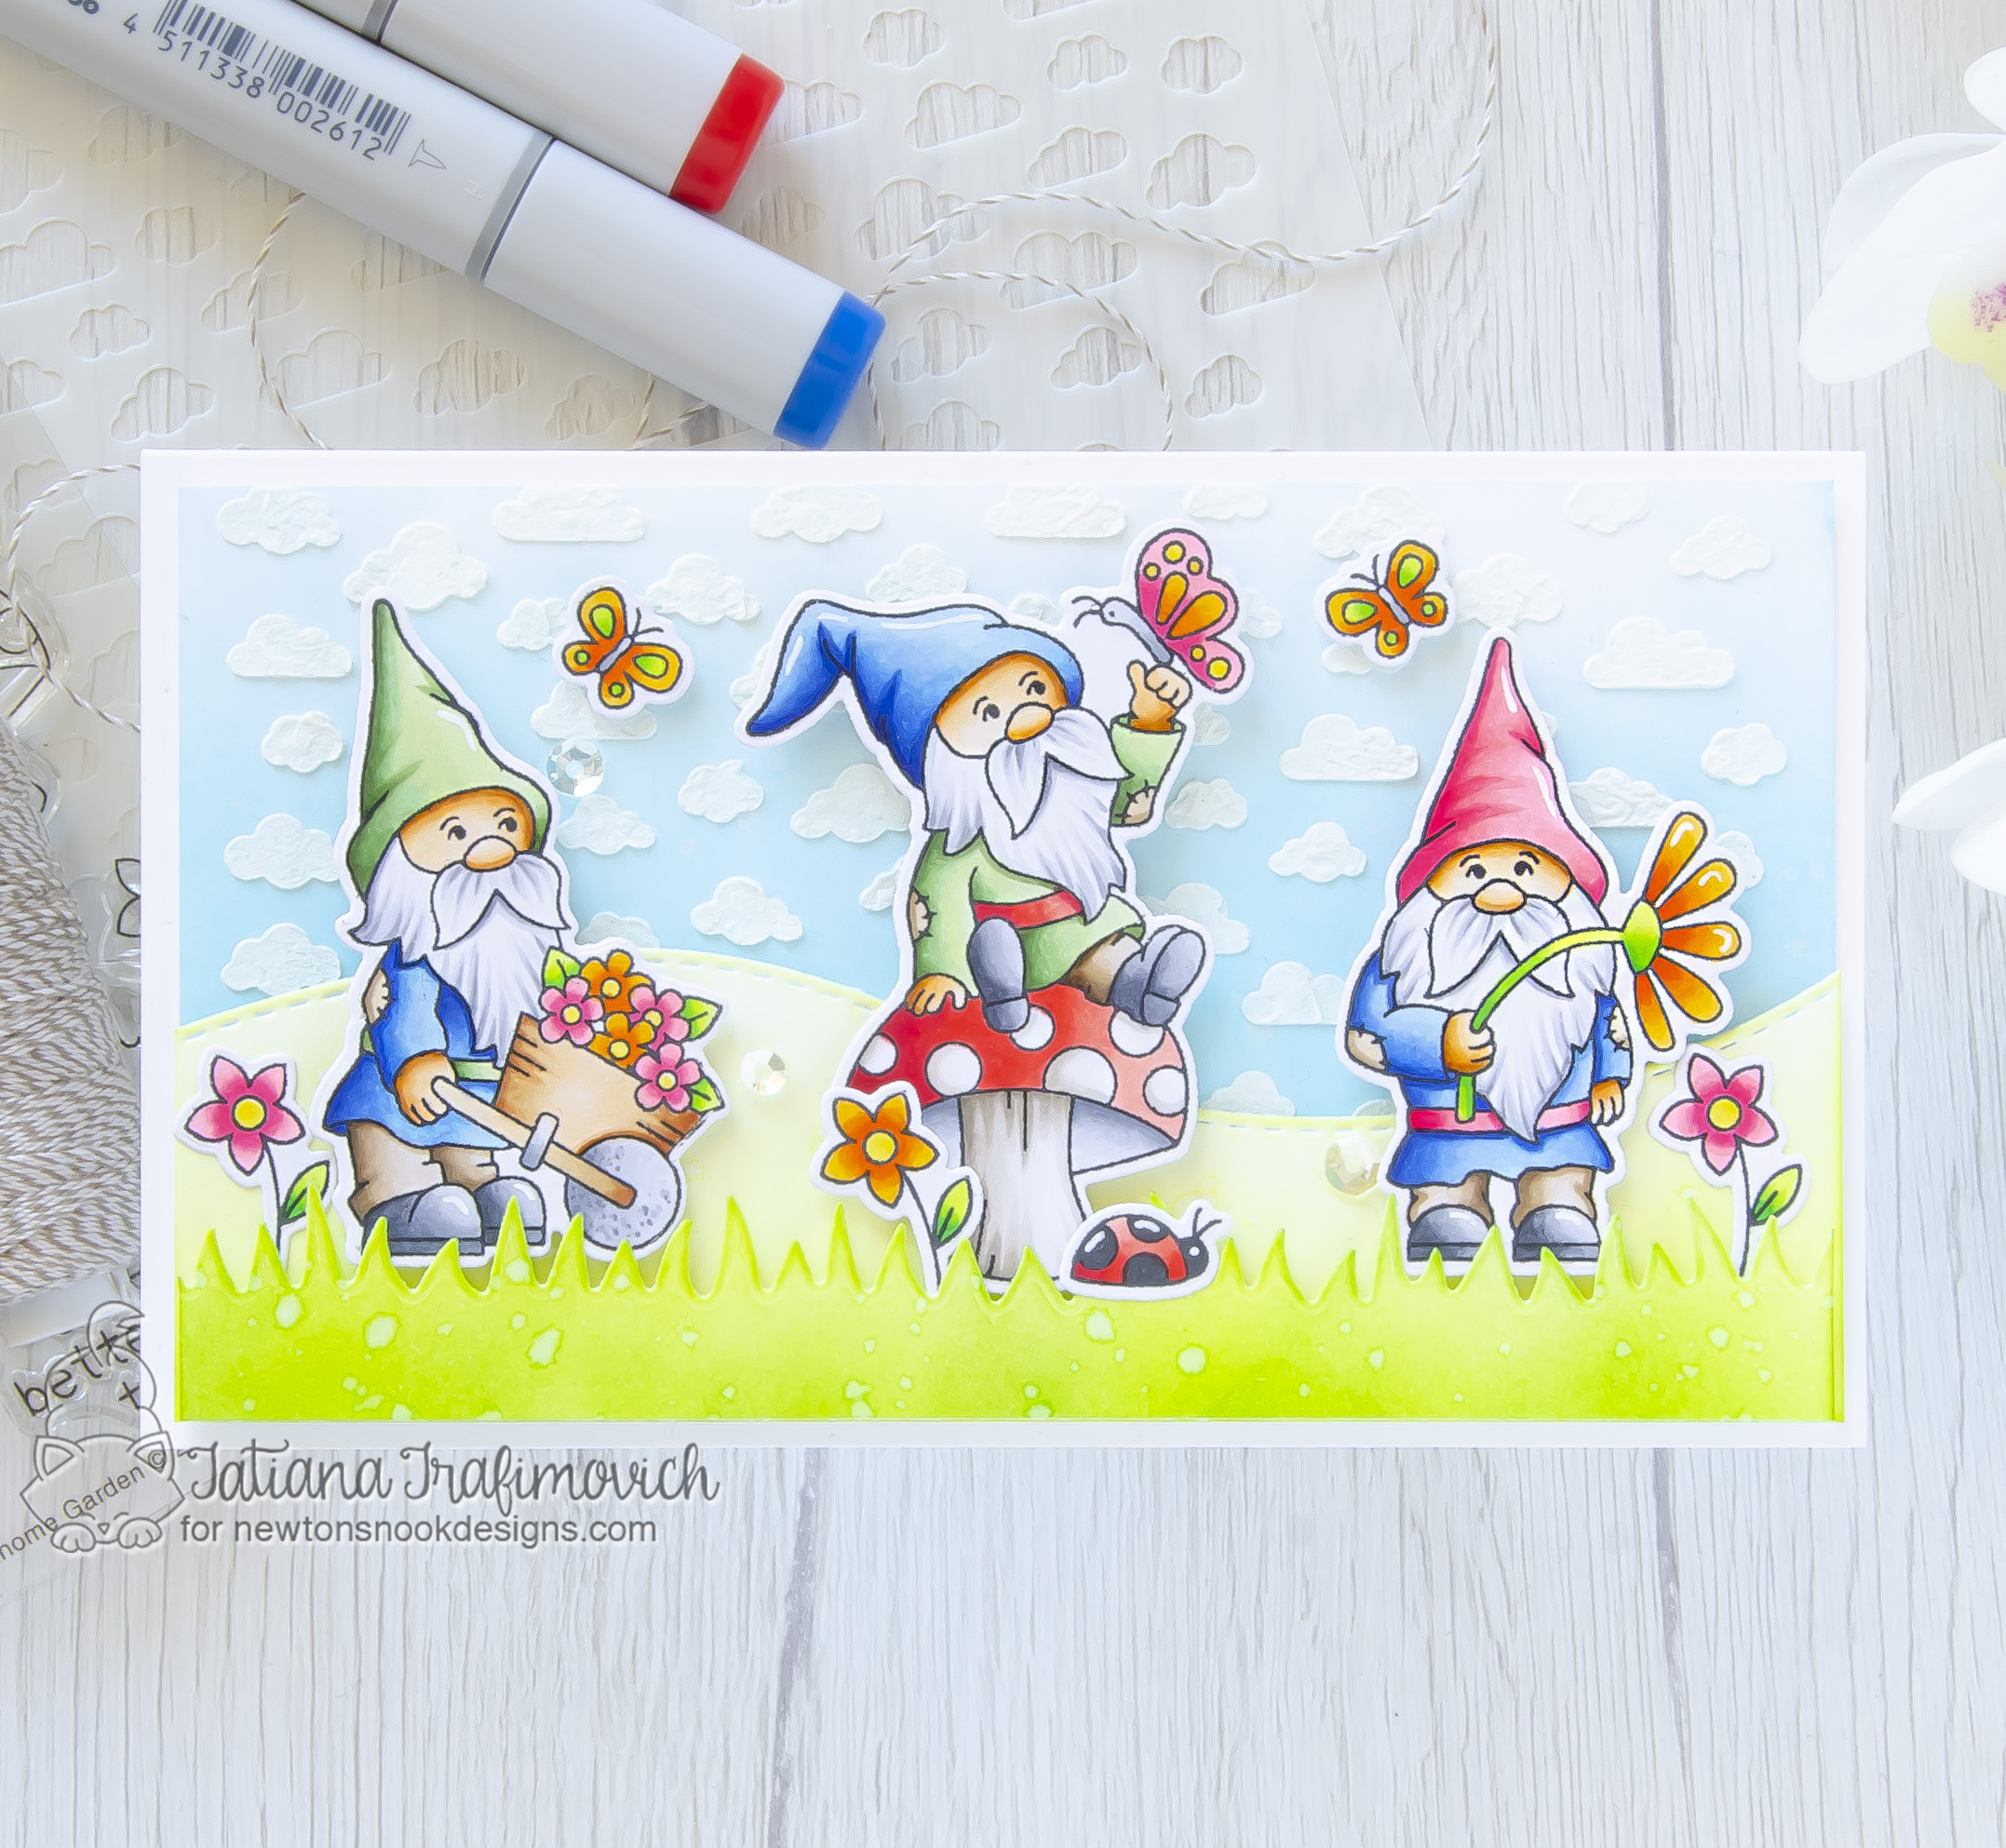 Gnome-One Deserves A Better Birthday Than You! #handmade card by Tatiana Trafimovich #tatianacraftandart - Gnome Garden stamp set by Newton's Nook Designs #newtonsnook